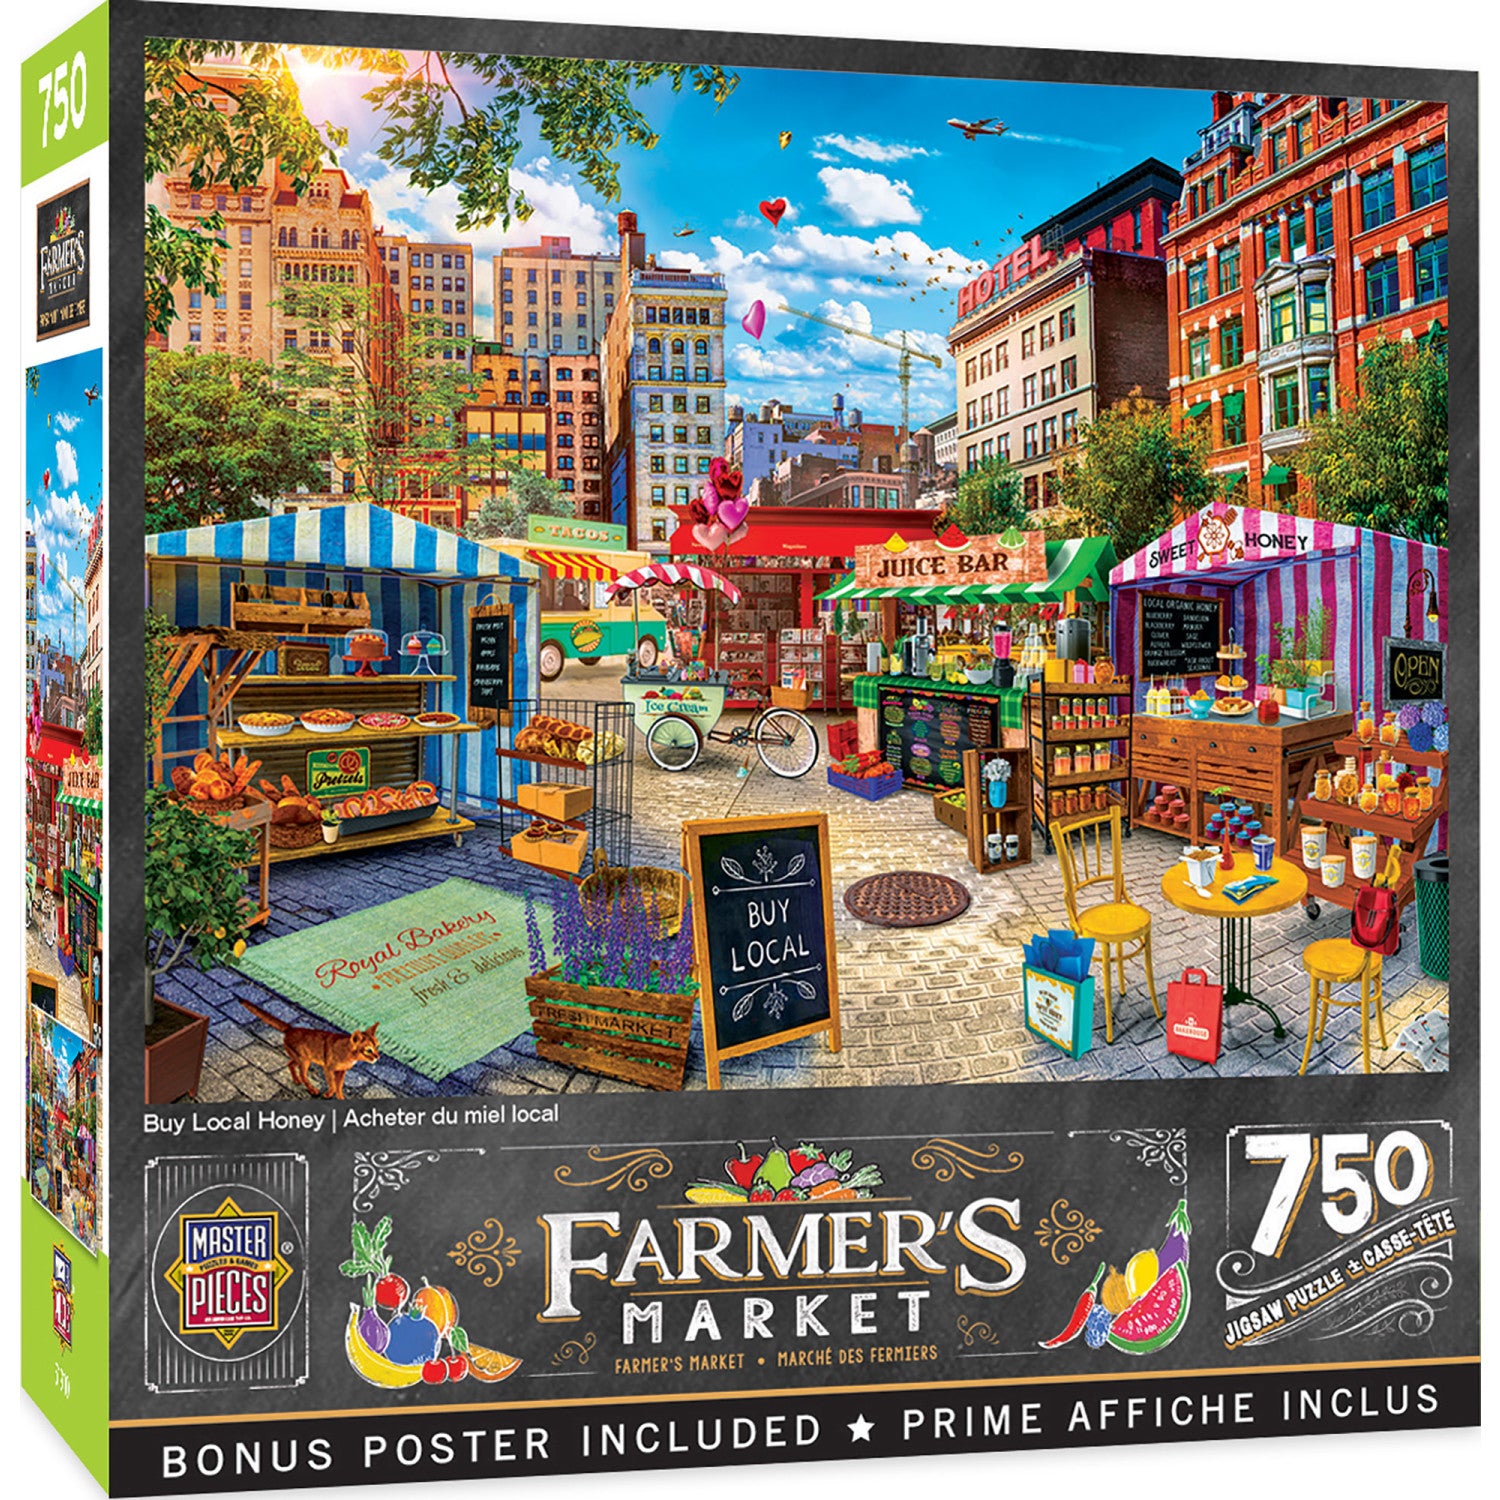 Farmer's Market - Buy Local Honey 750 Piece Jigsaw Puzzle